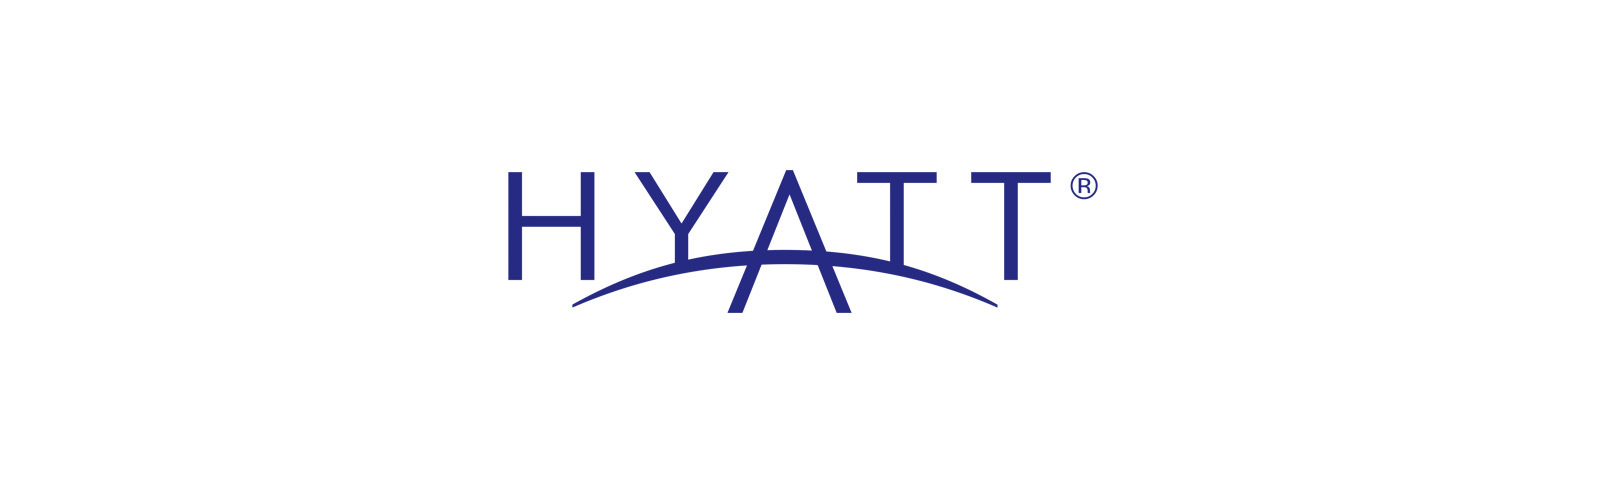 Hyatt_Webinar_ABC-Site_Header_Placeholder_1600x489 copy